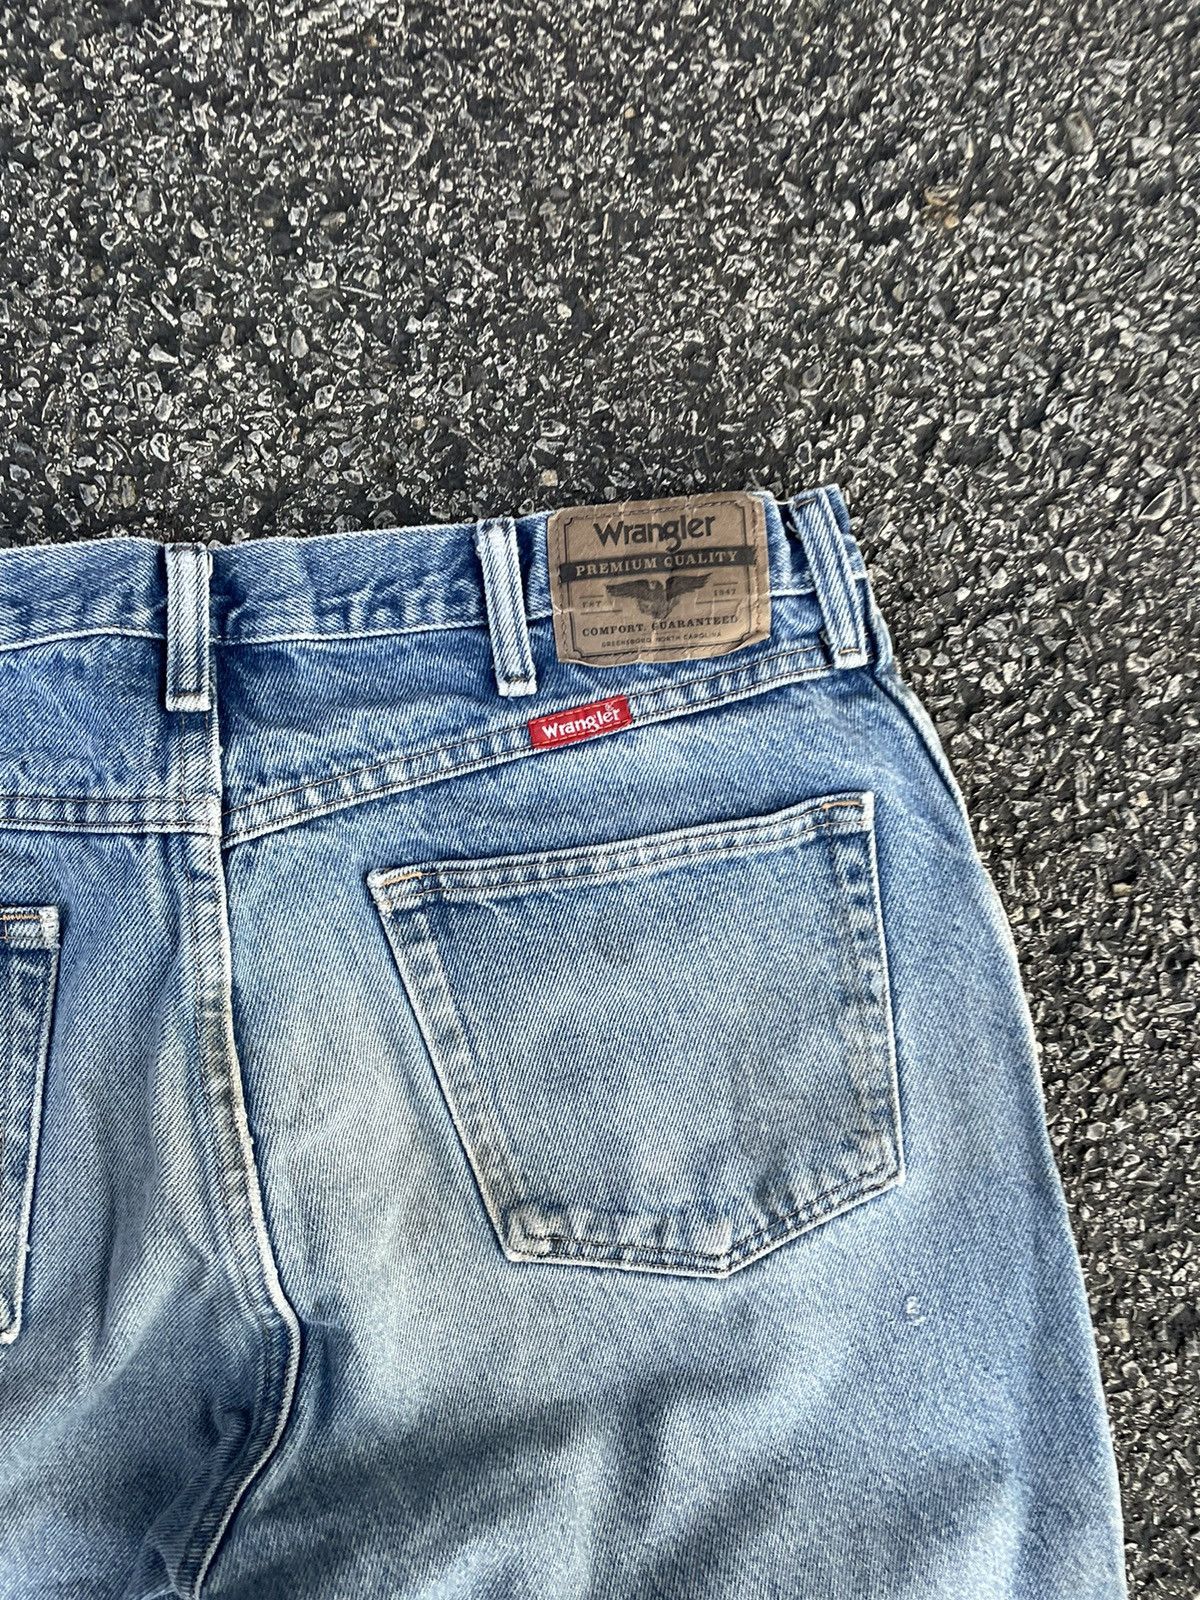 Wrangler Vintage wrangler distressed light wash jeans Size US 34 / EU 50 - 4 Thumbnail